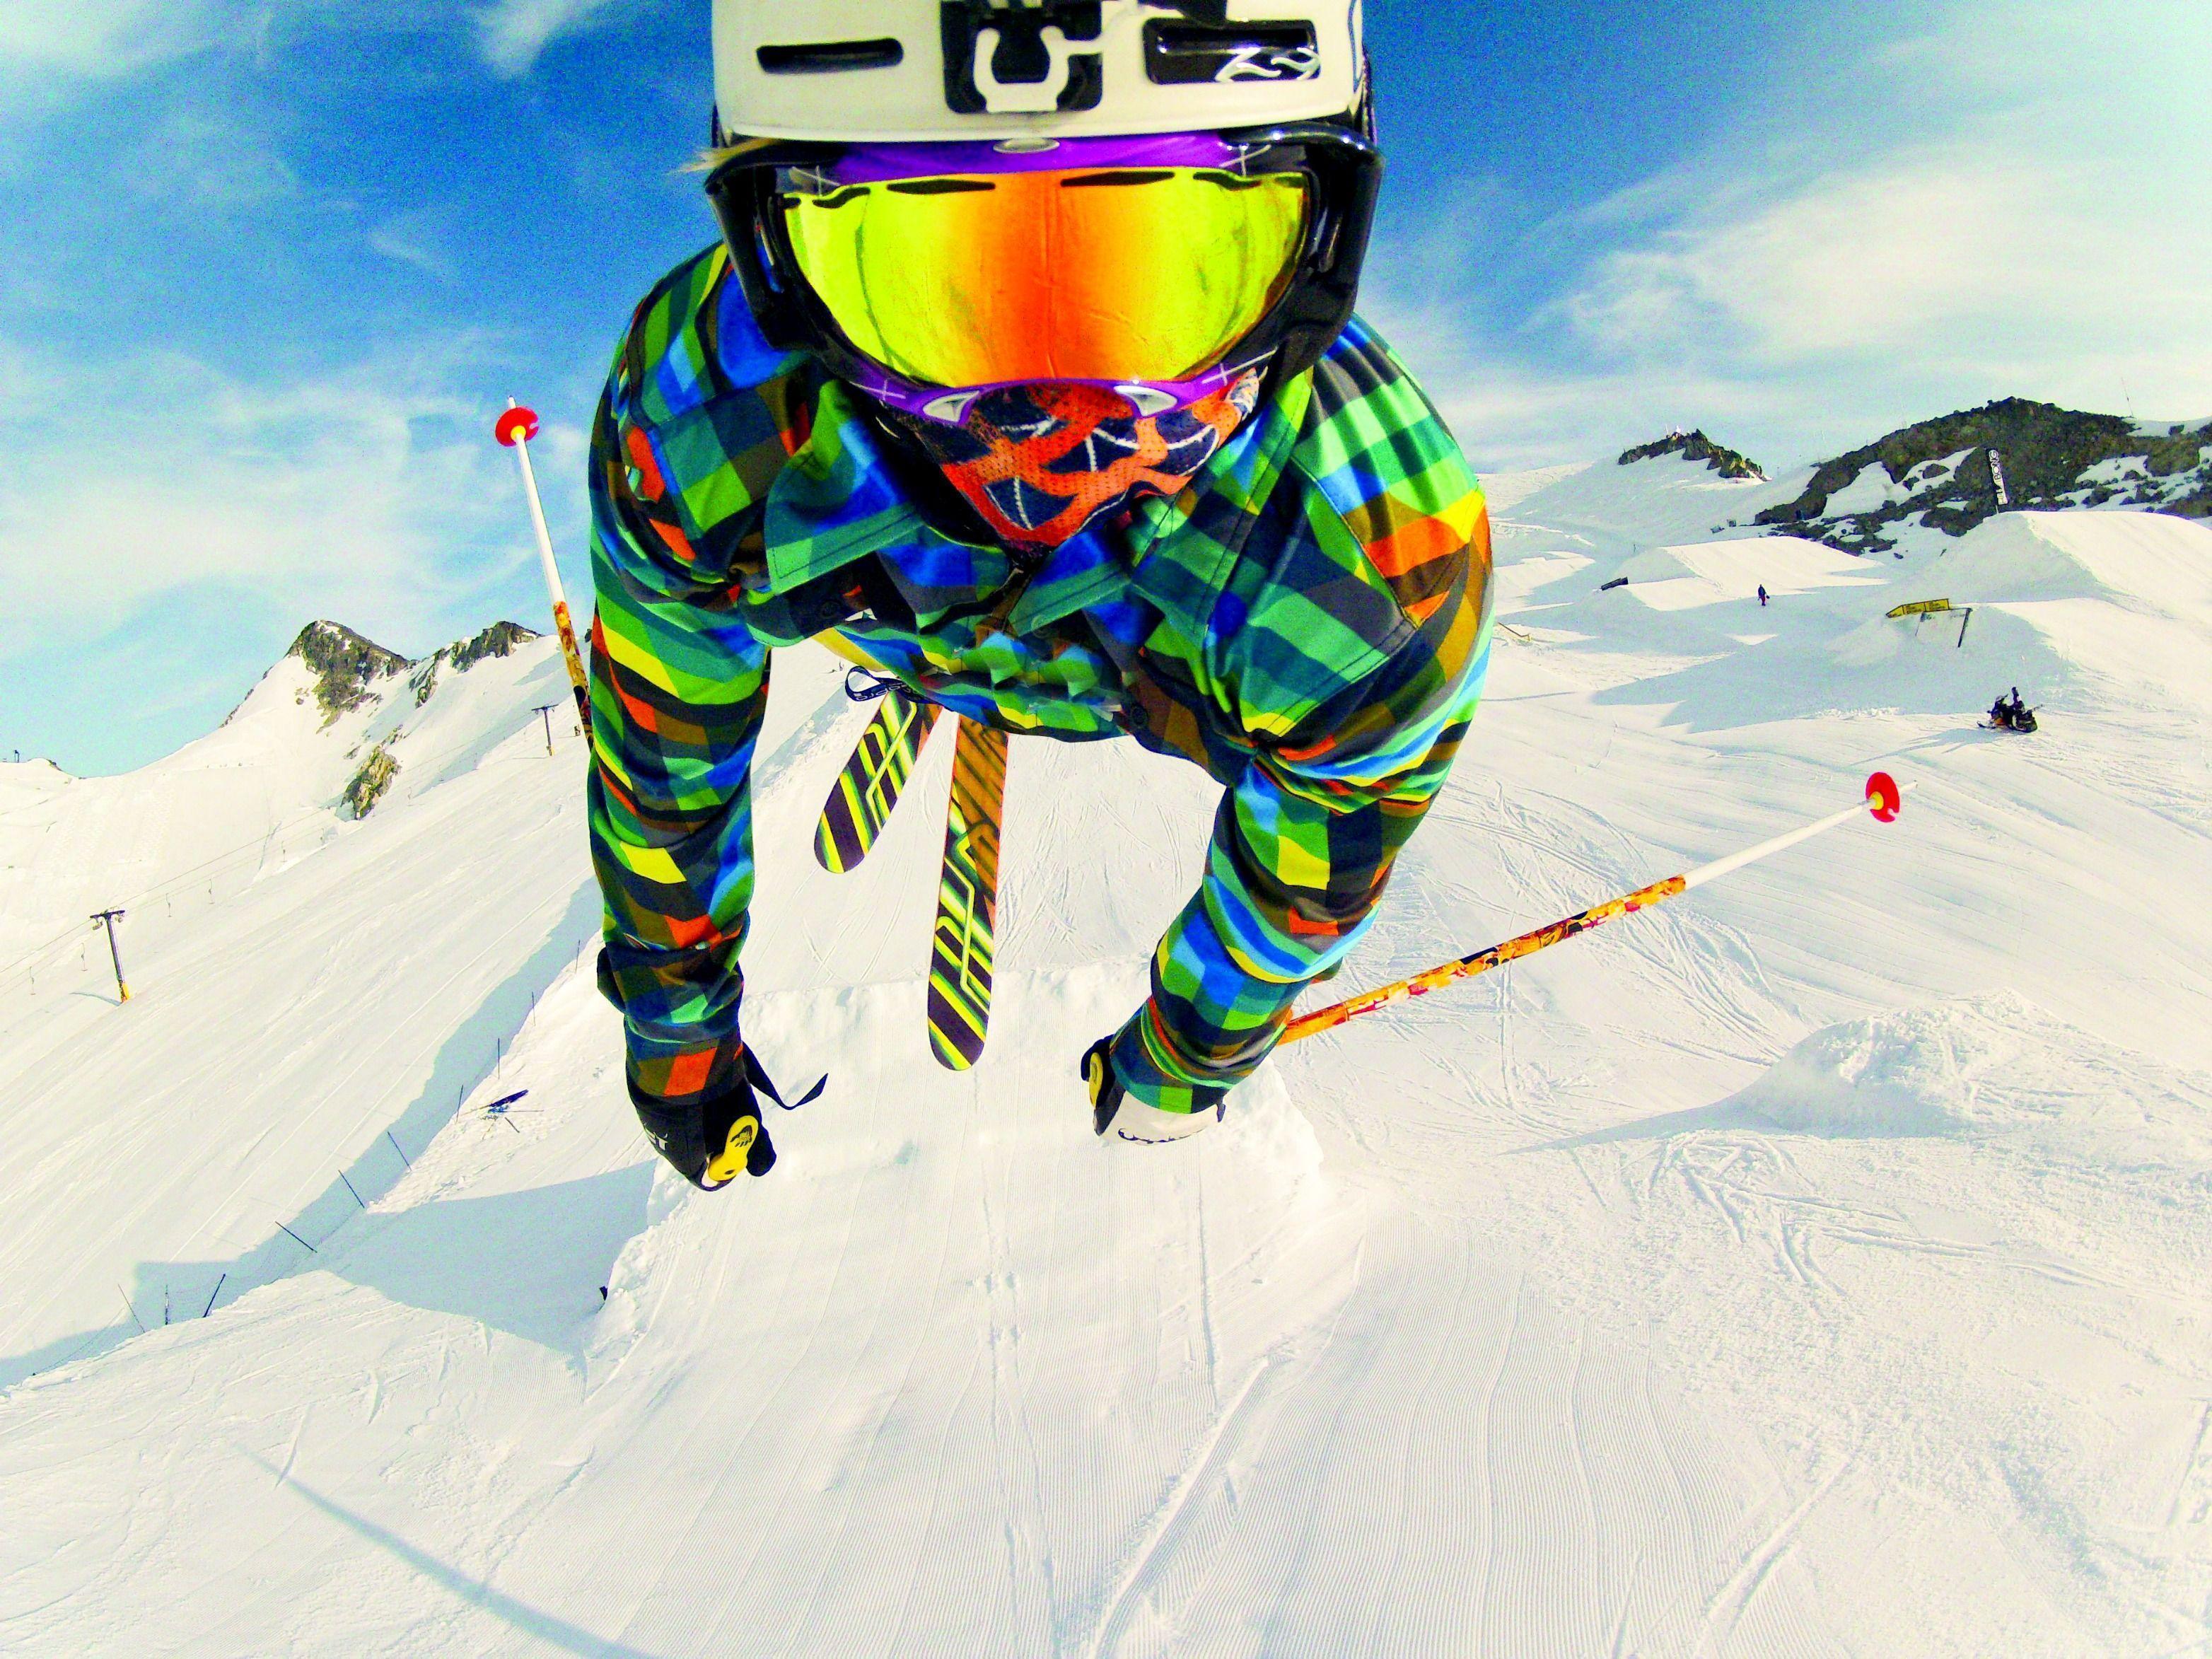 GoPro Skiier captures an epic selfie. GoPro